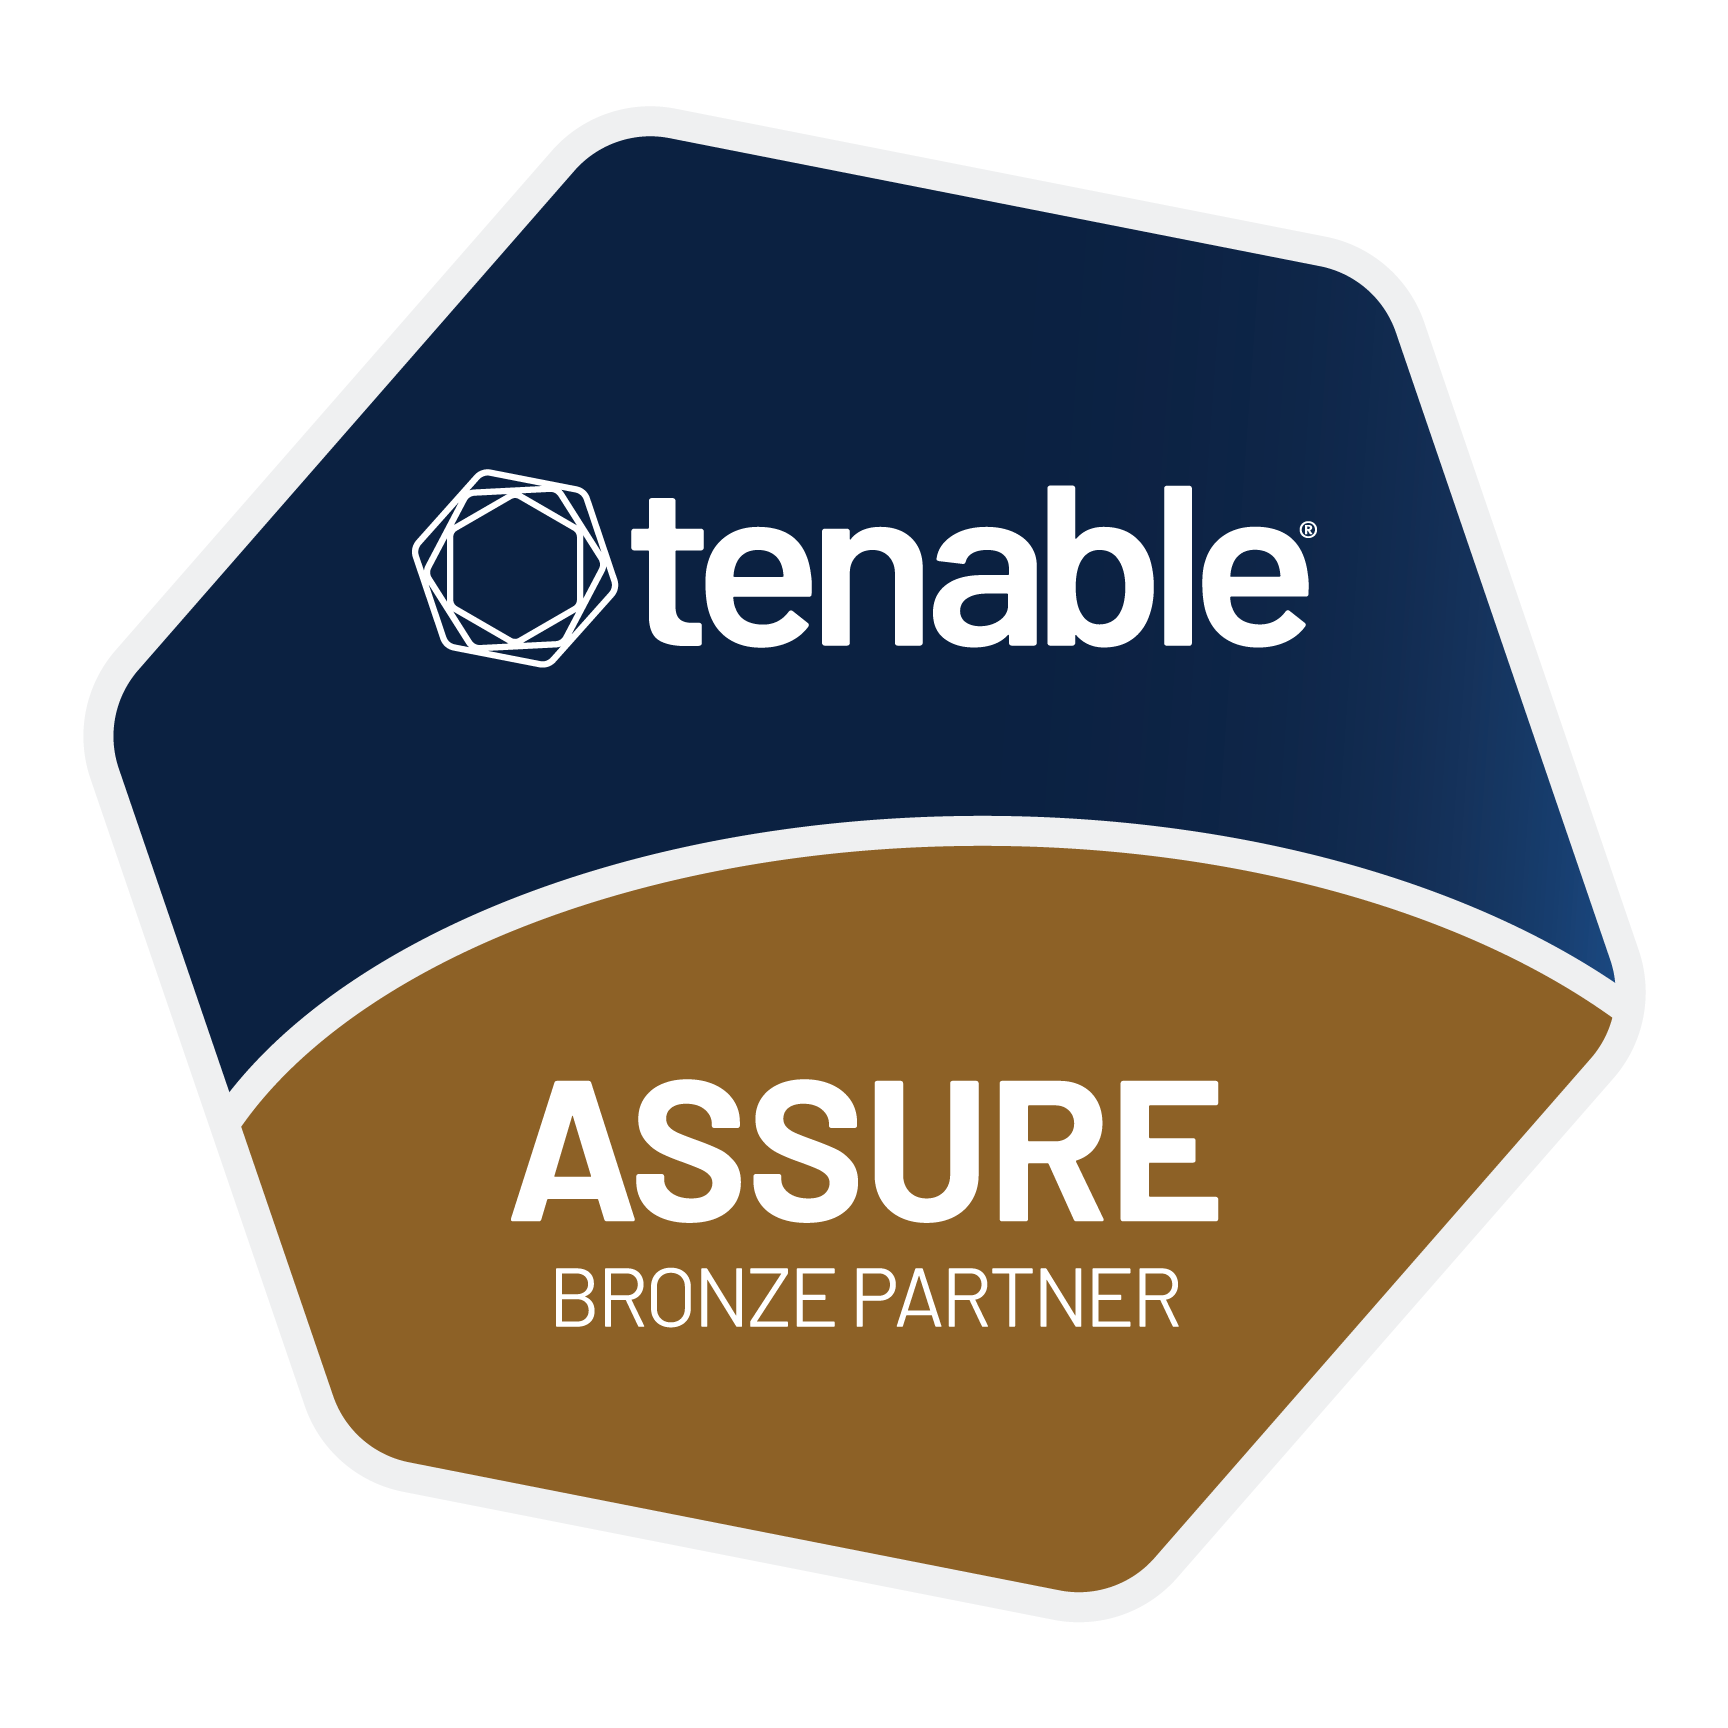 Tenable Assure 青铜合作伙伴徽章